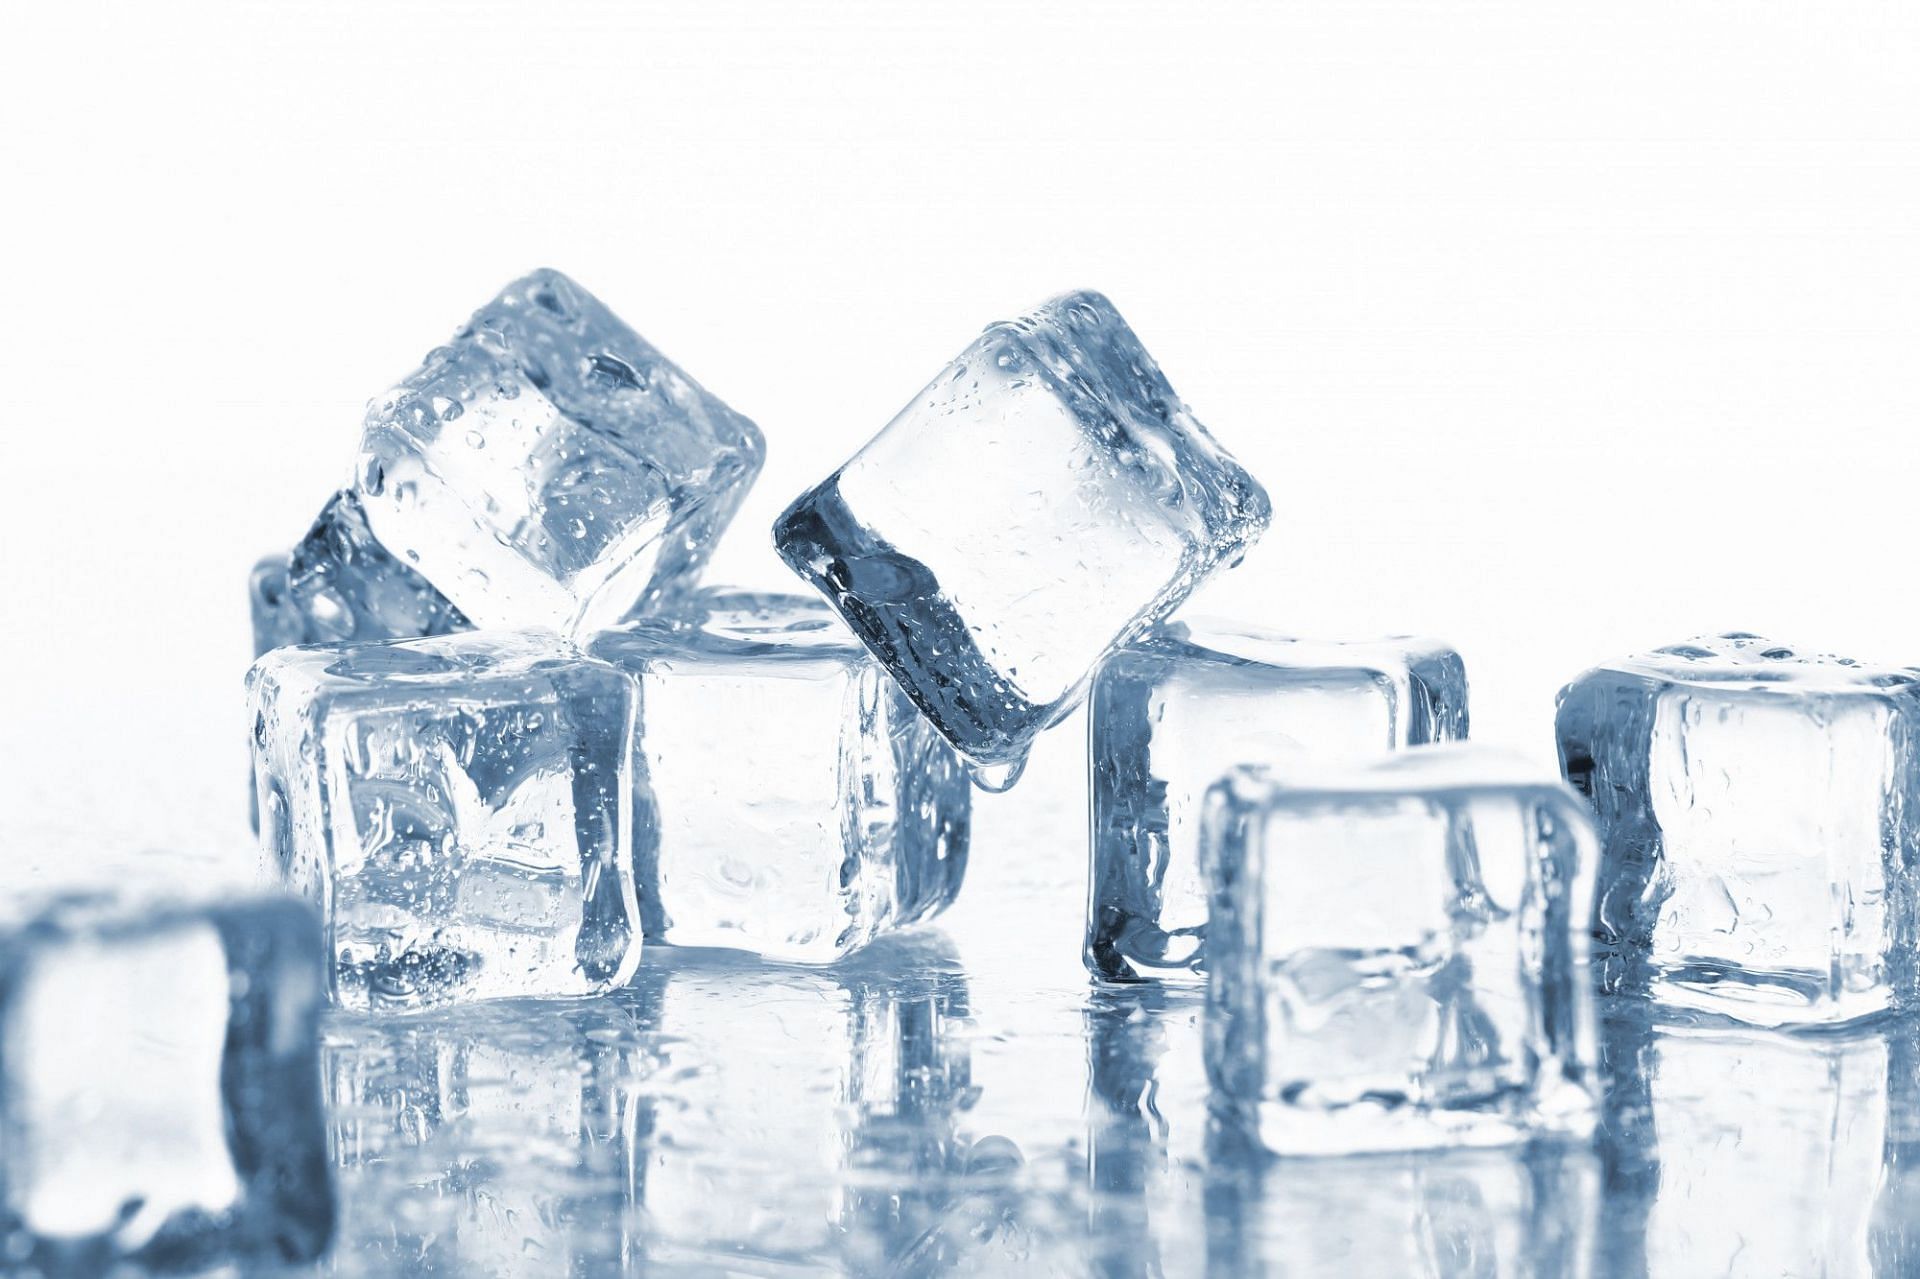 Chew ice chips or drink cold water. (Image via Freepik/Racool_studio)